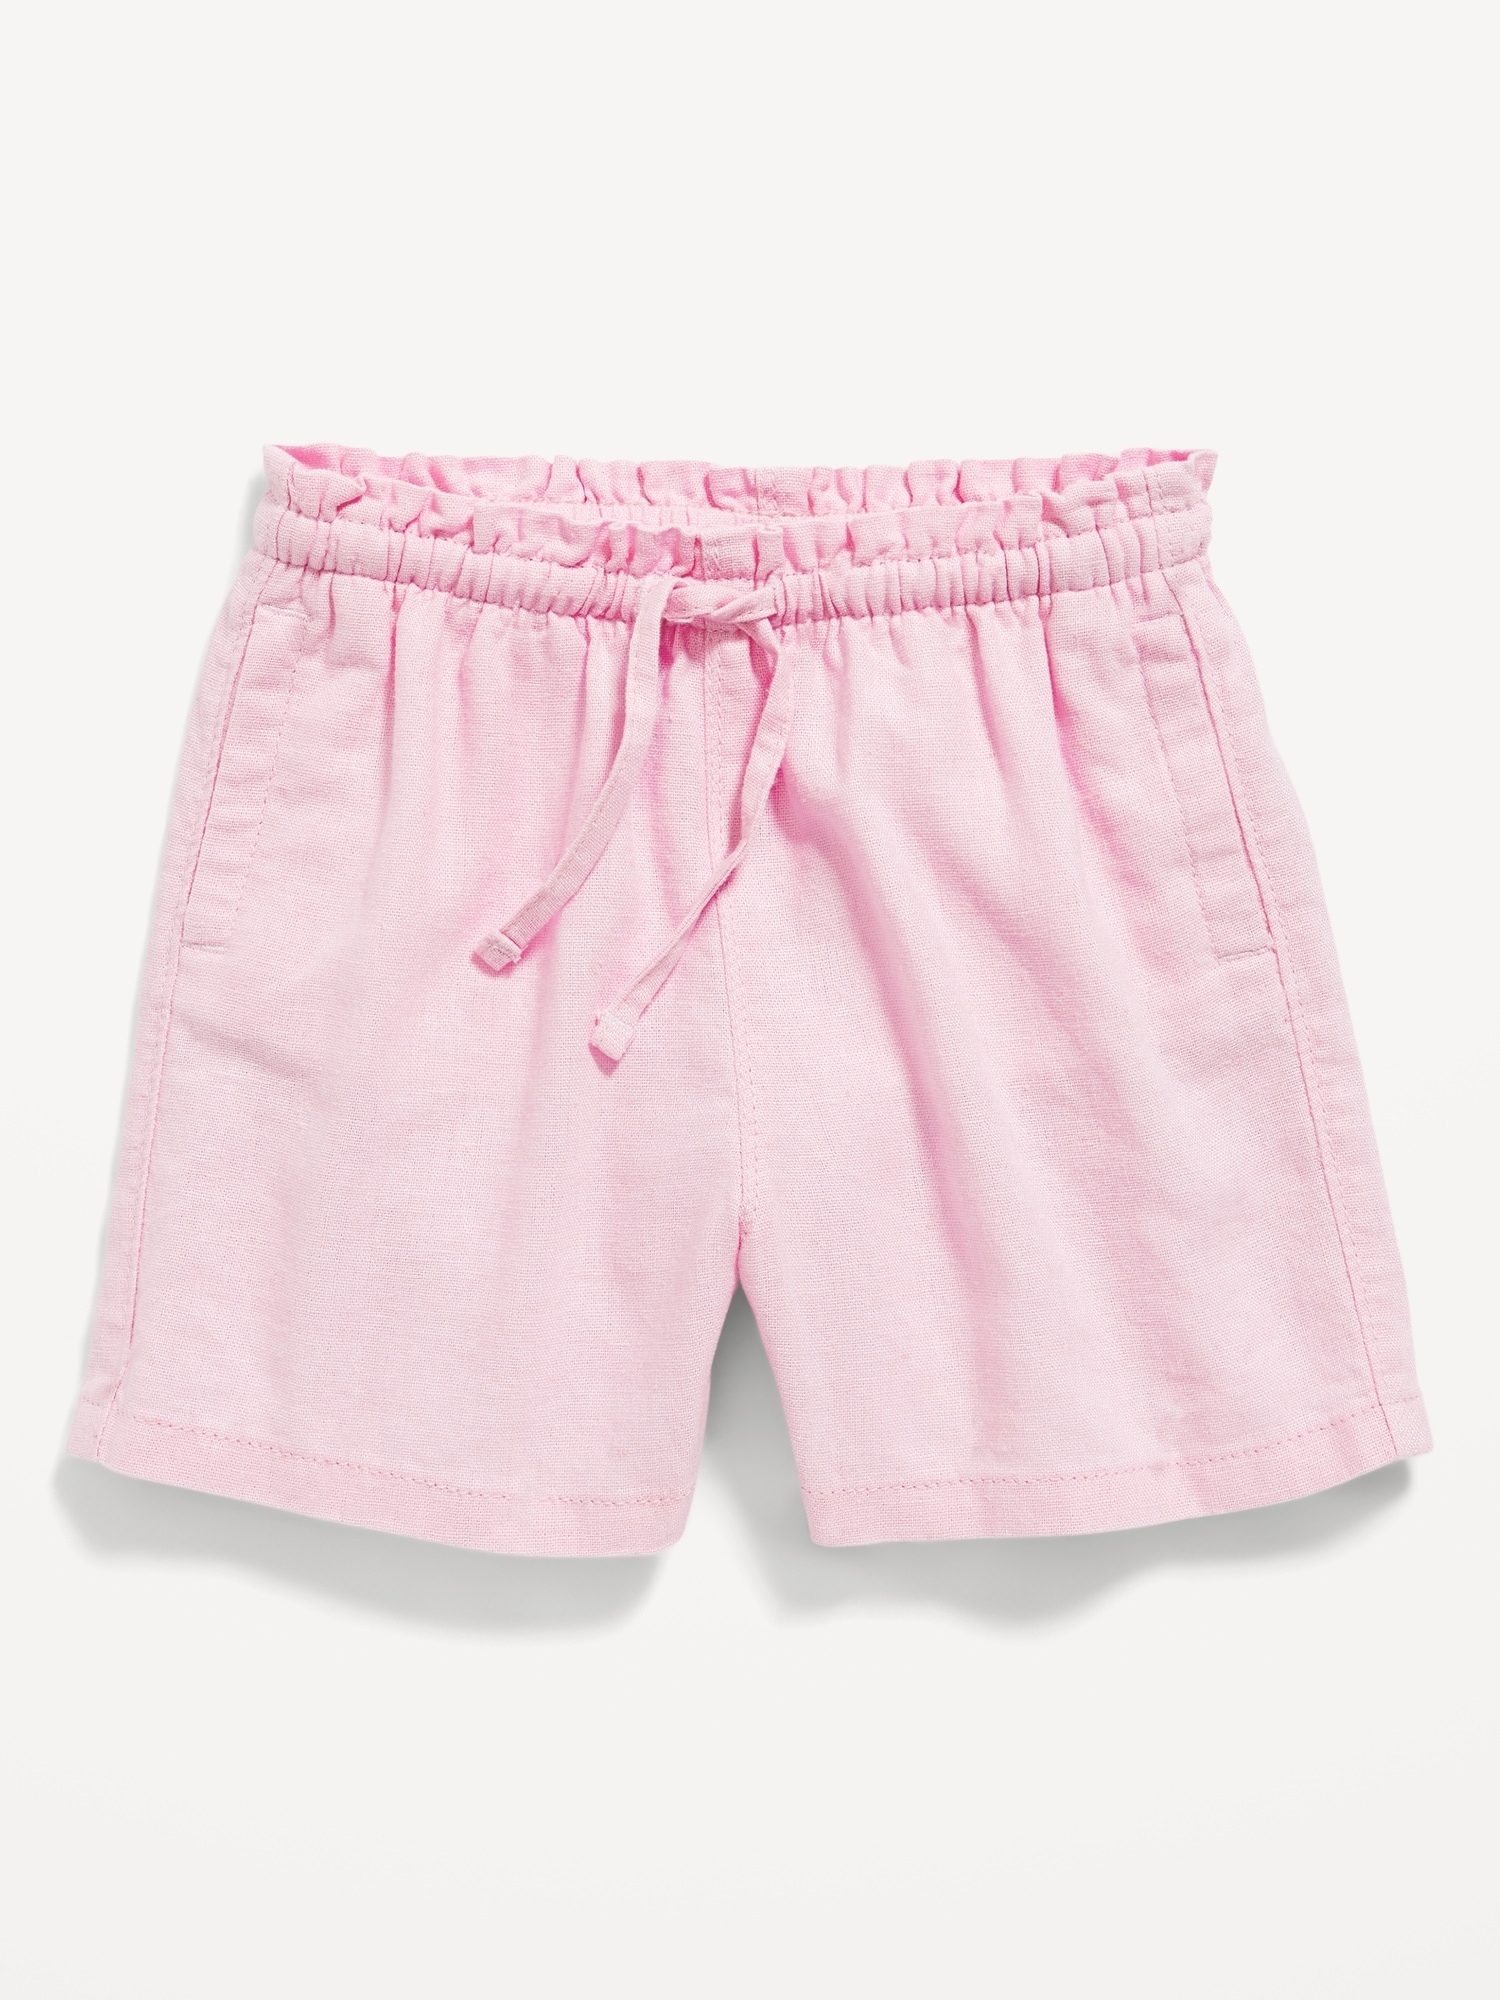 Printed Functional Drawstring Pull-On Shorts for Toddler Girls